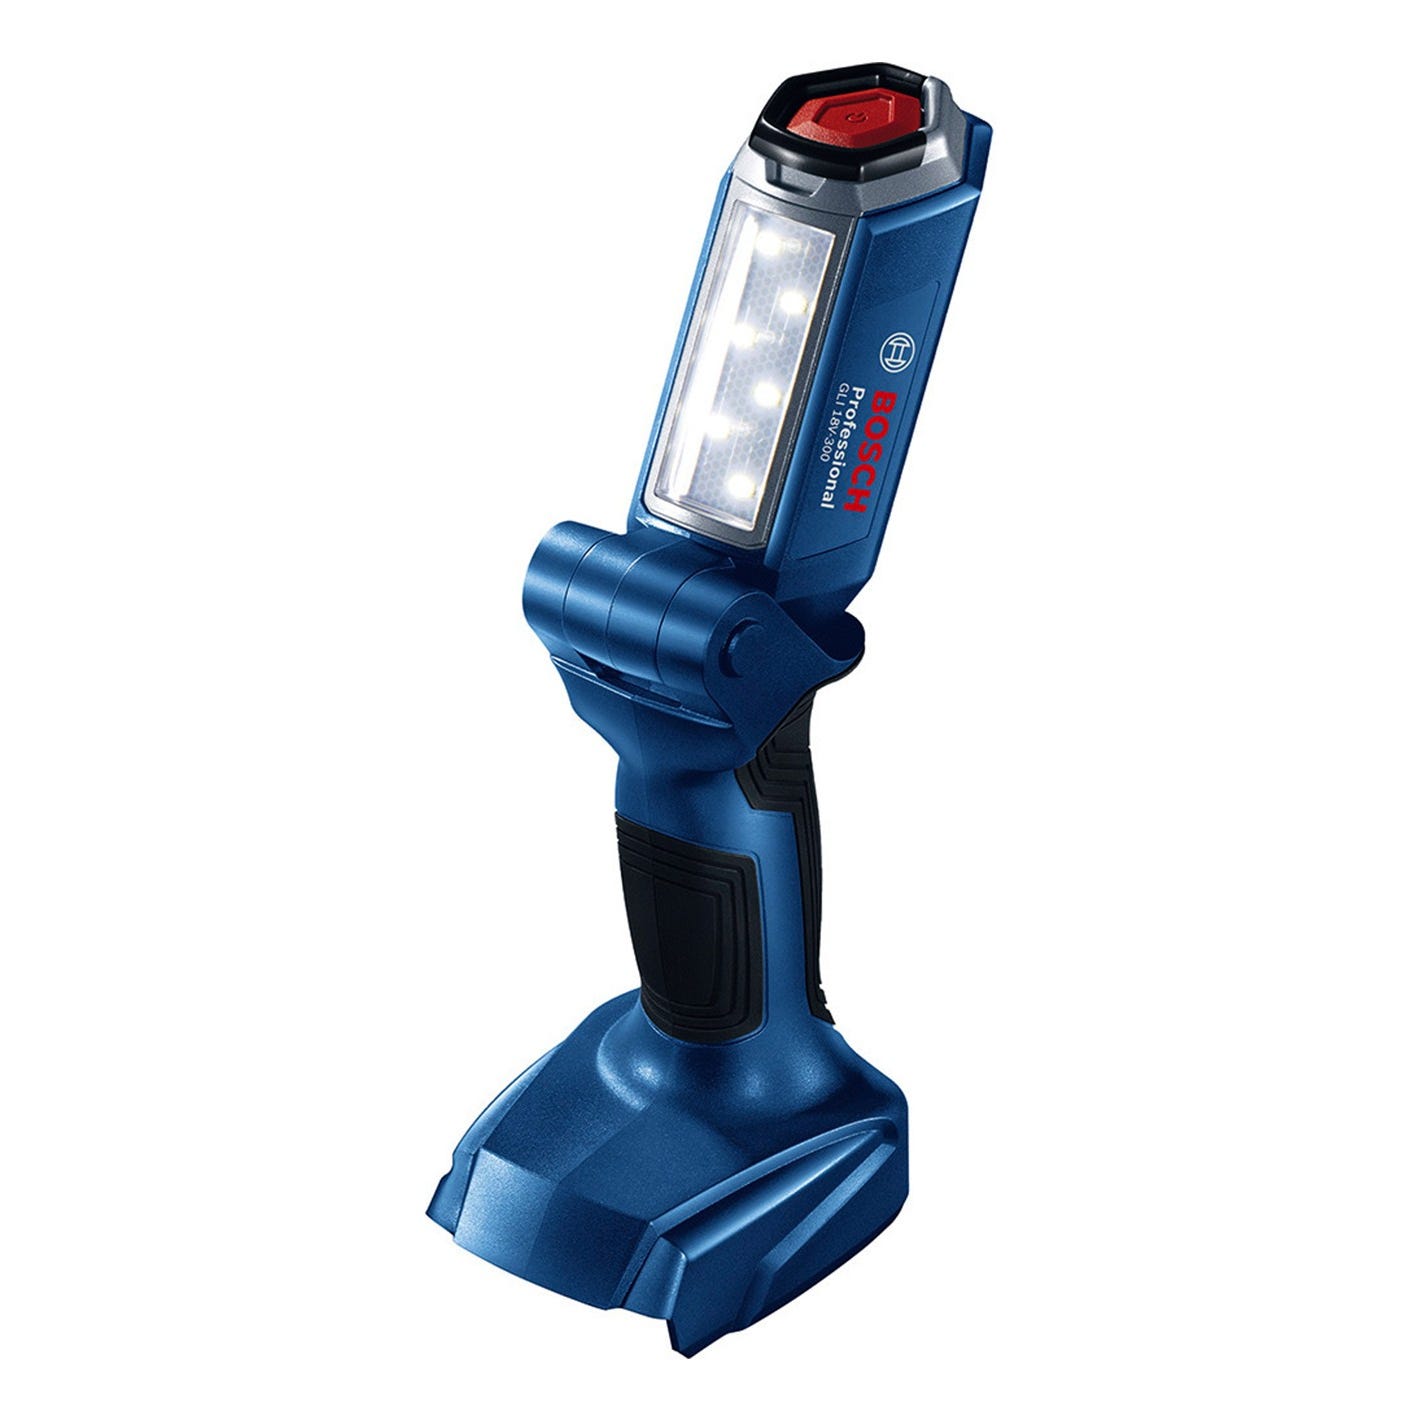 Lampe LED GLI 18V-300 worklight en boite carton (sans batterie ni chargeur) - BOSCH - 06014A1100 5